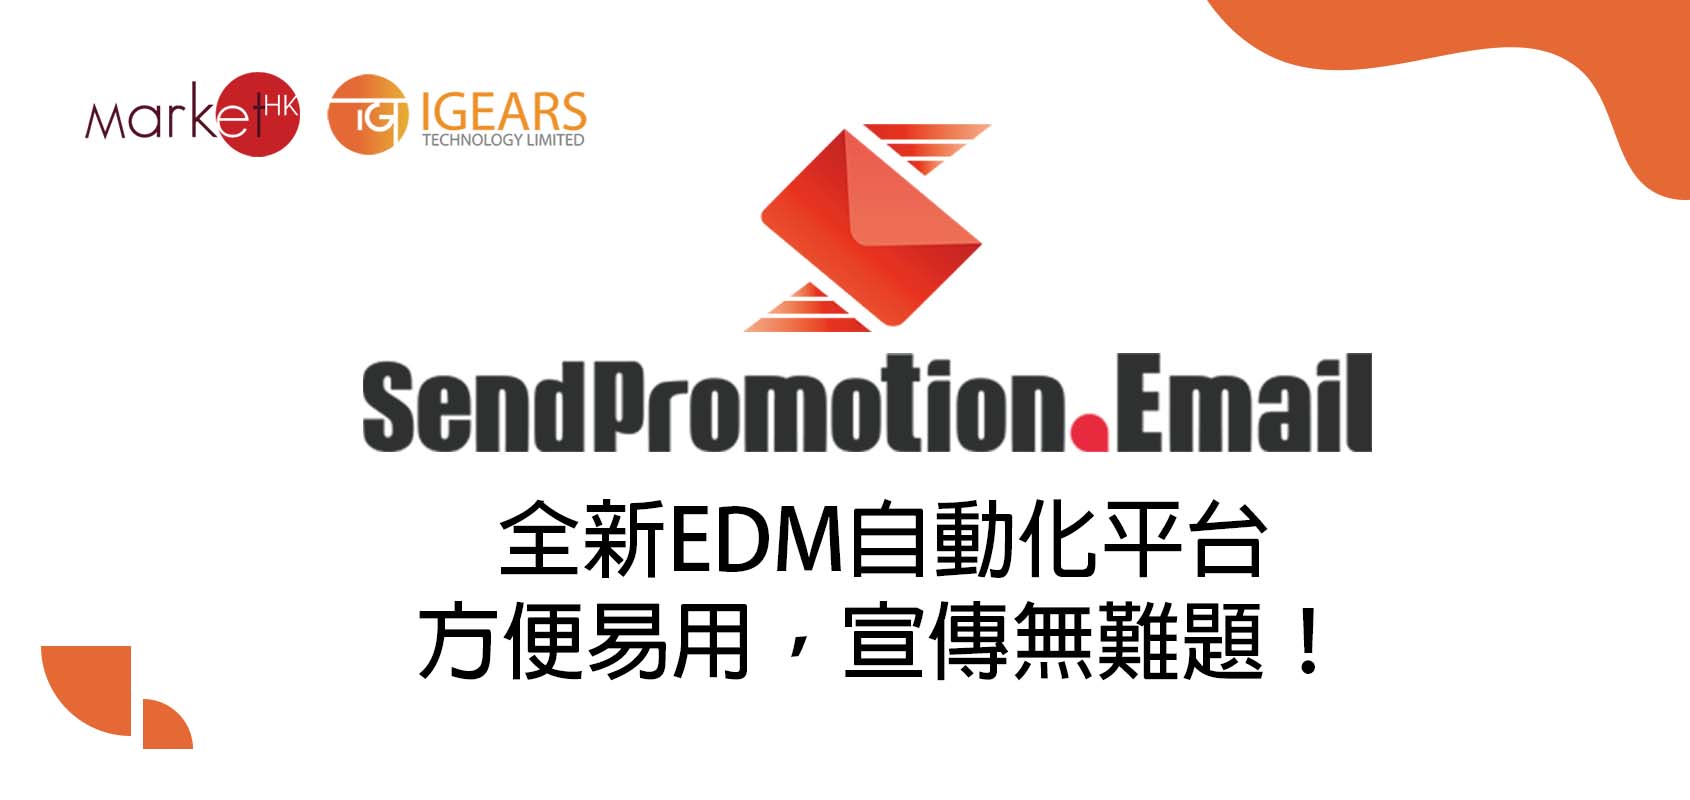 edm-sendpromotion blog post